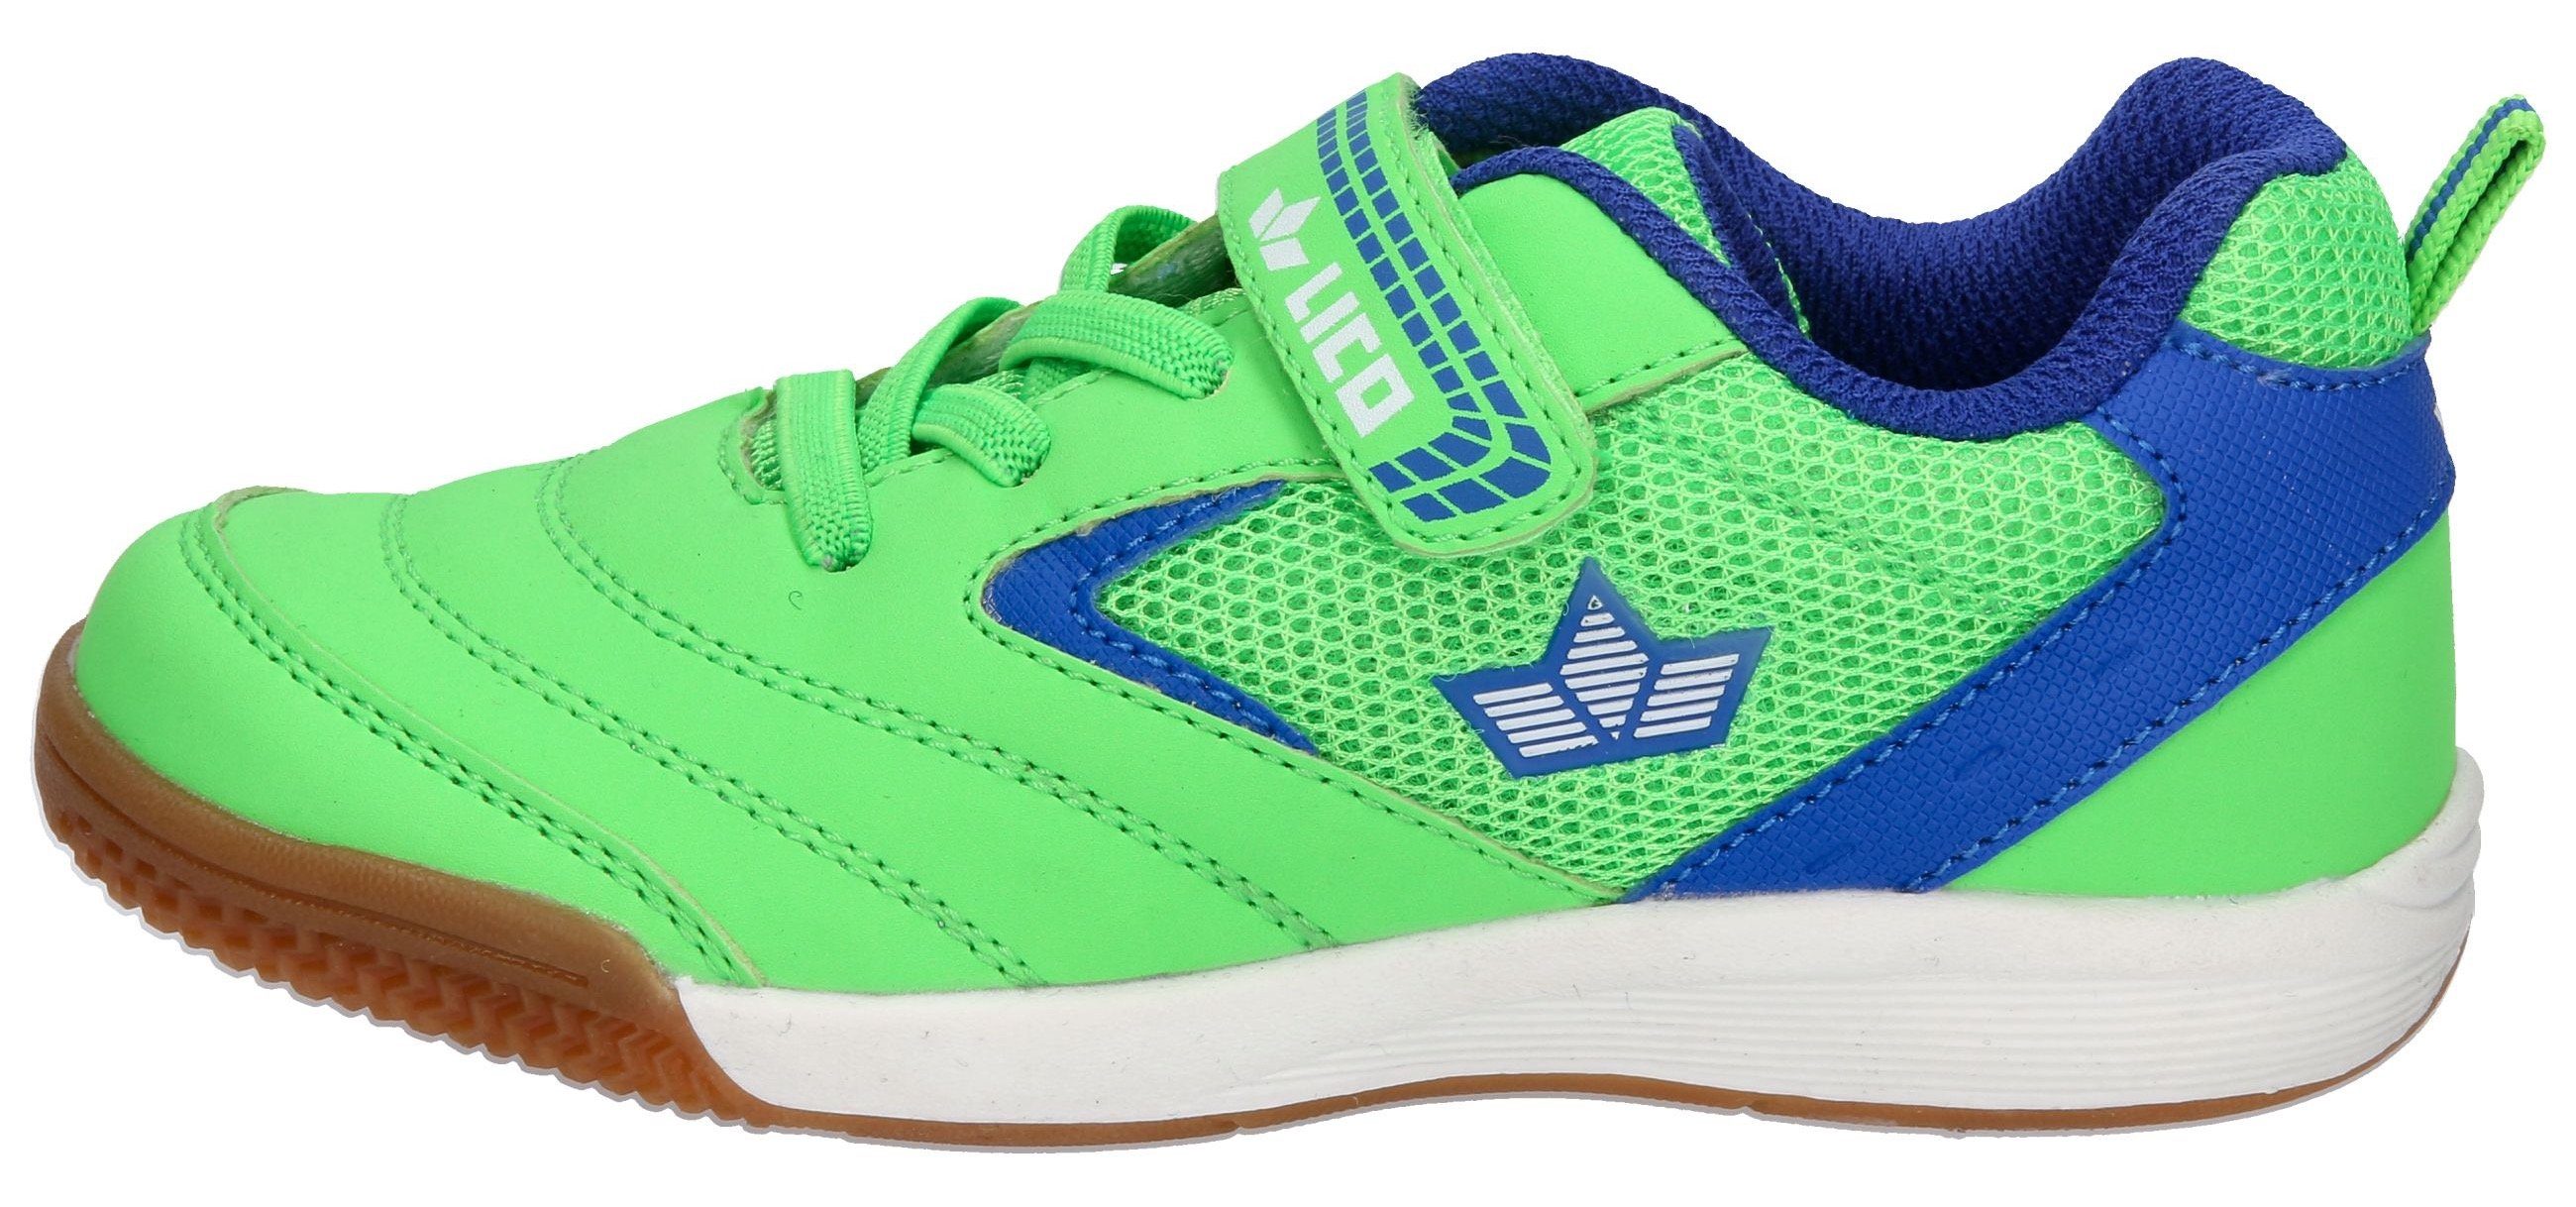 Lico Sneaker heller Laufsohle grün-blau Ari VS mit WMS